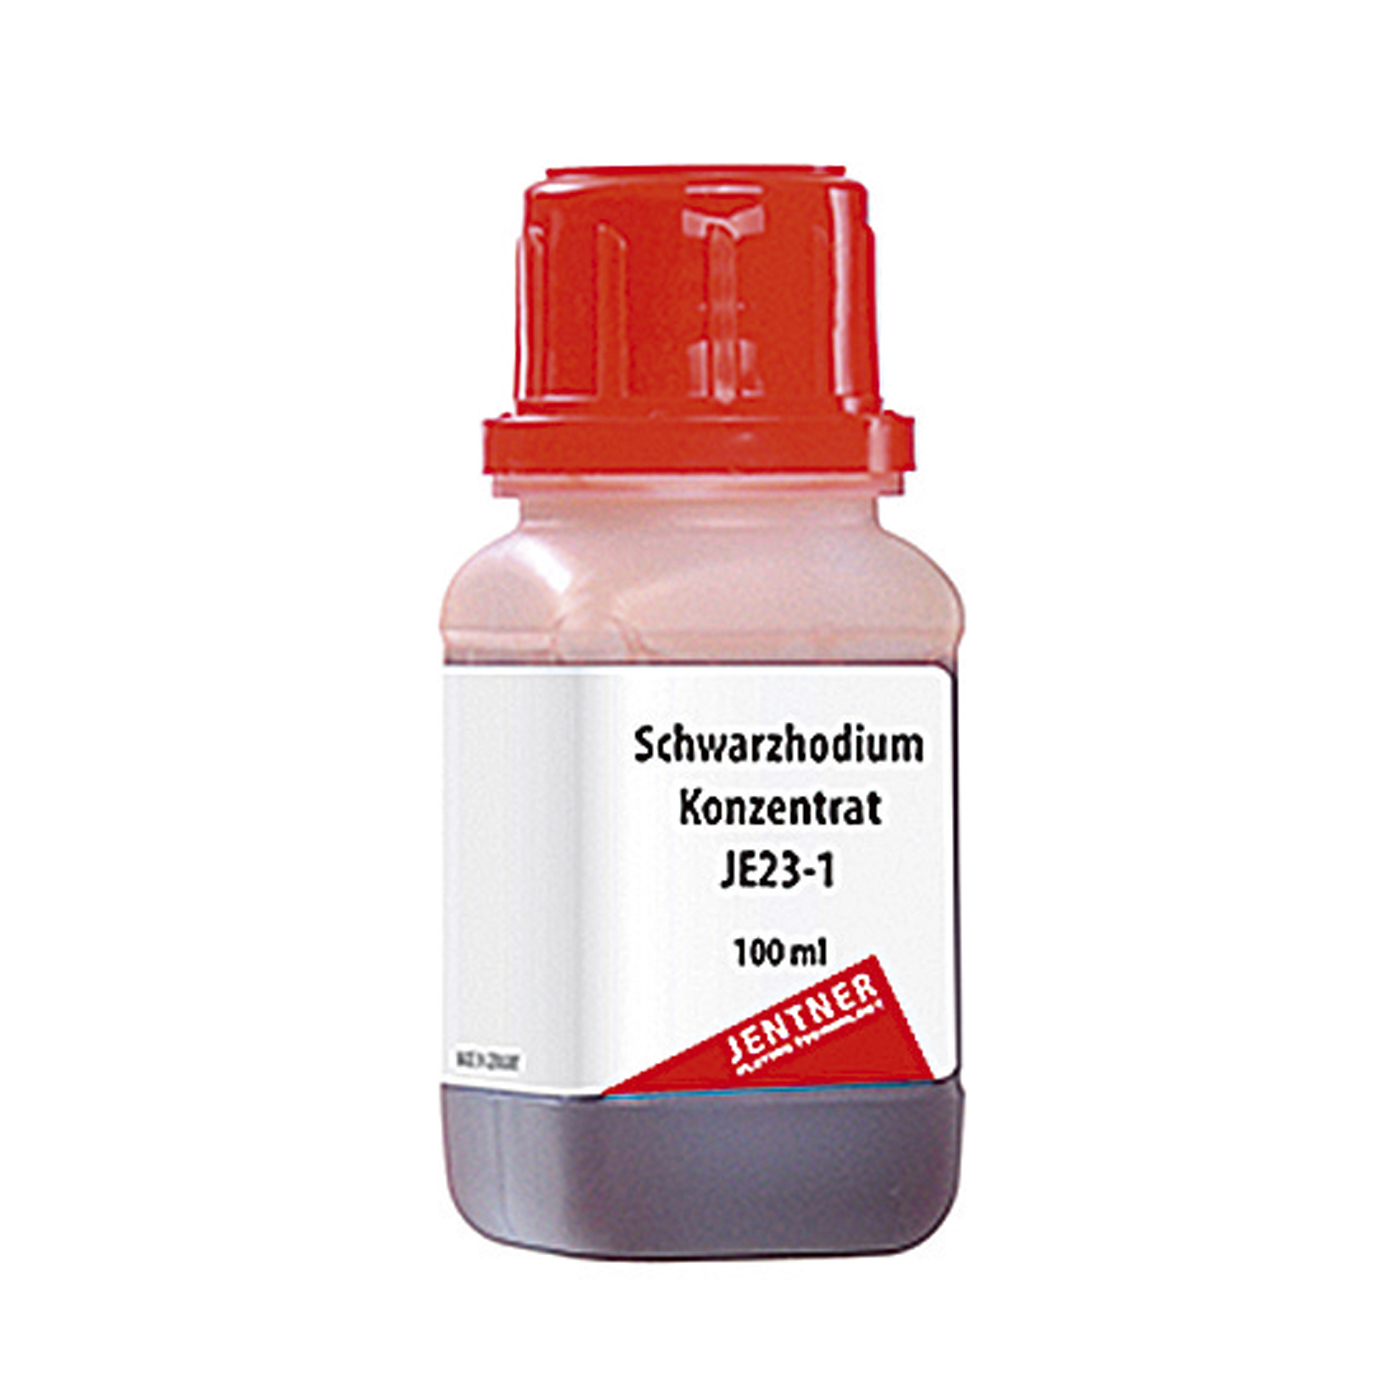 JE23-1 Black Rhodium Concentrate, 2 g Rh - 100 ml